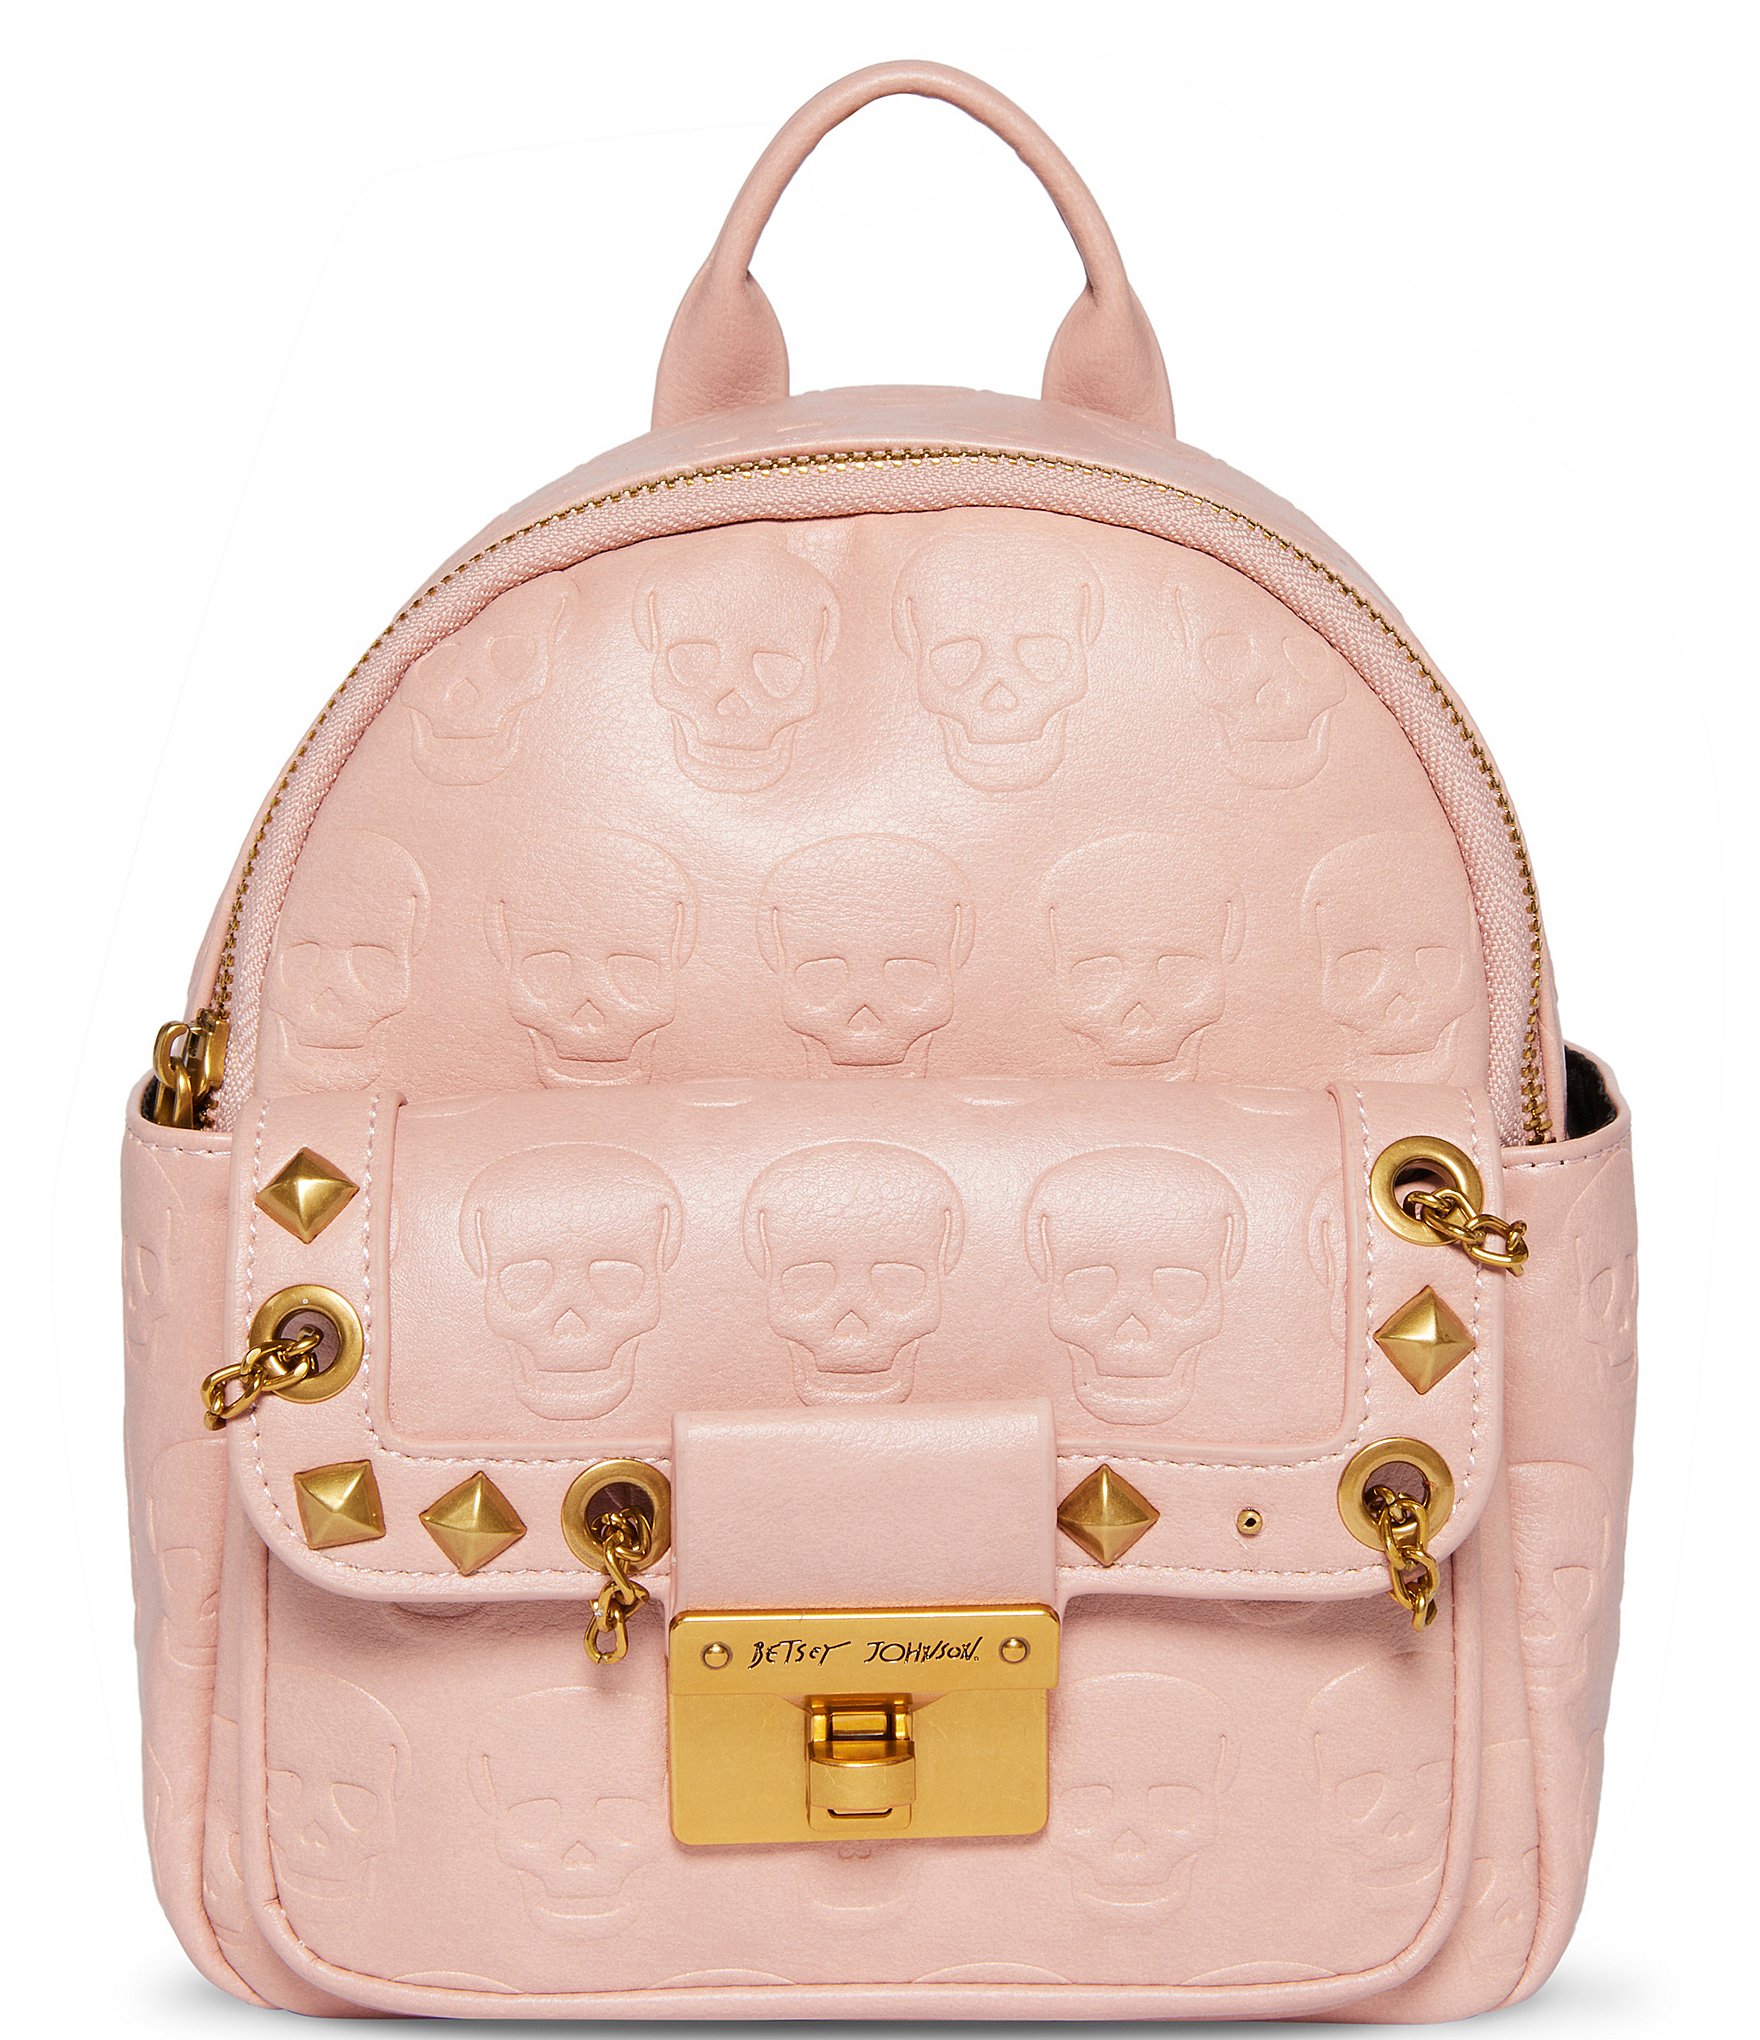 Betsey Johnson backpack purse | Vinted